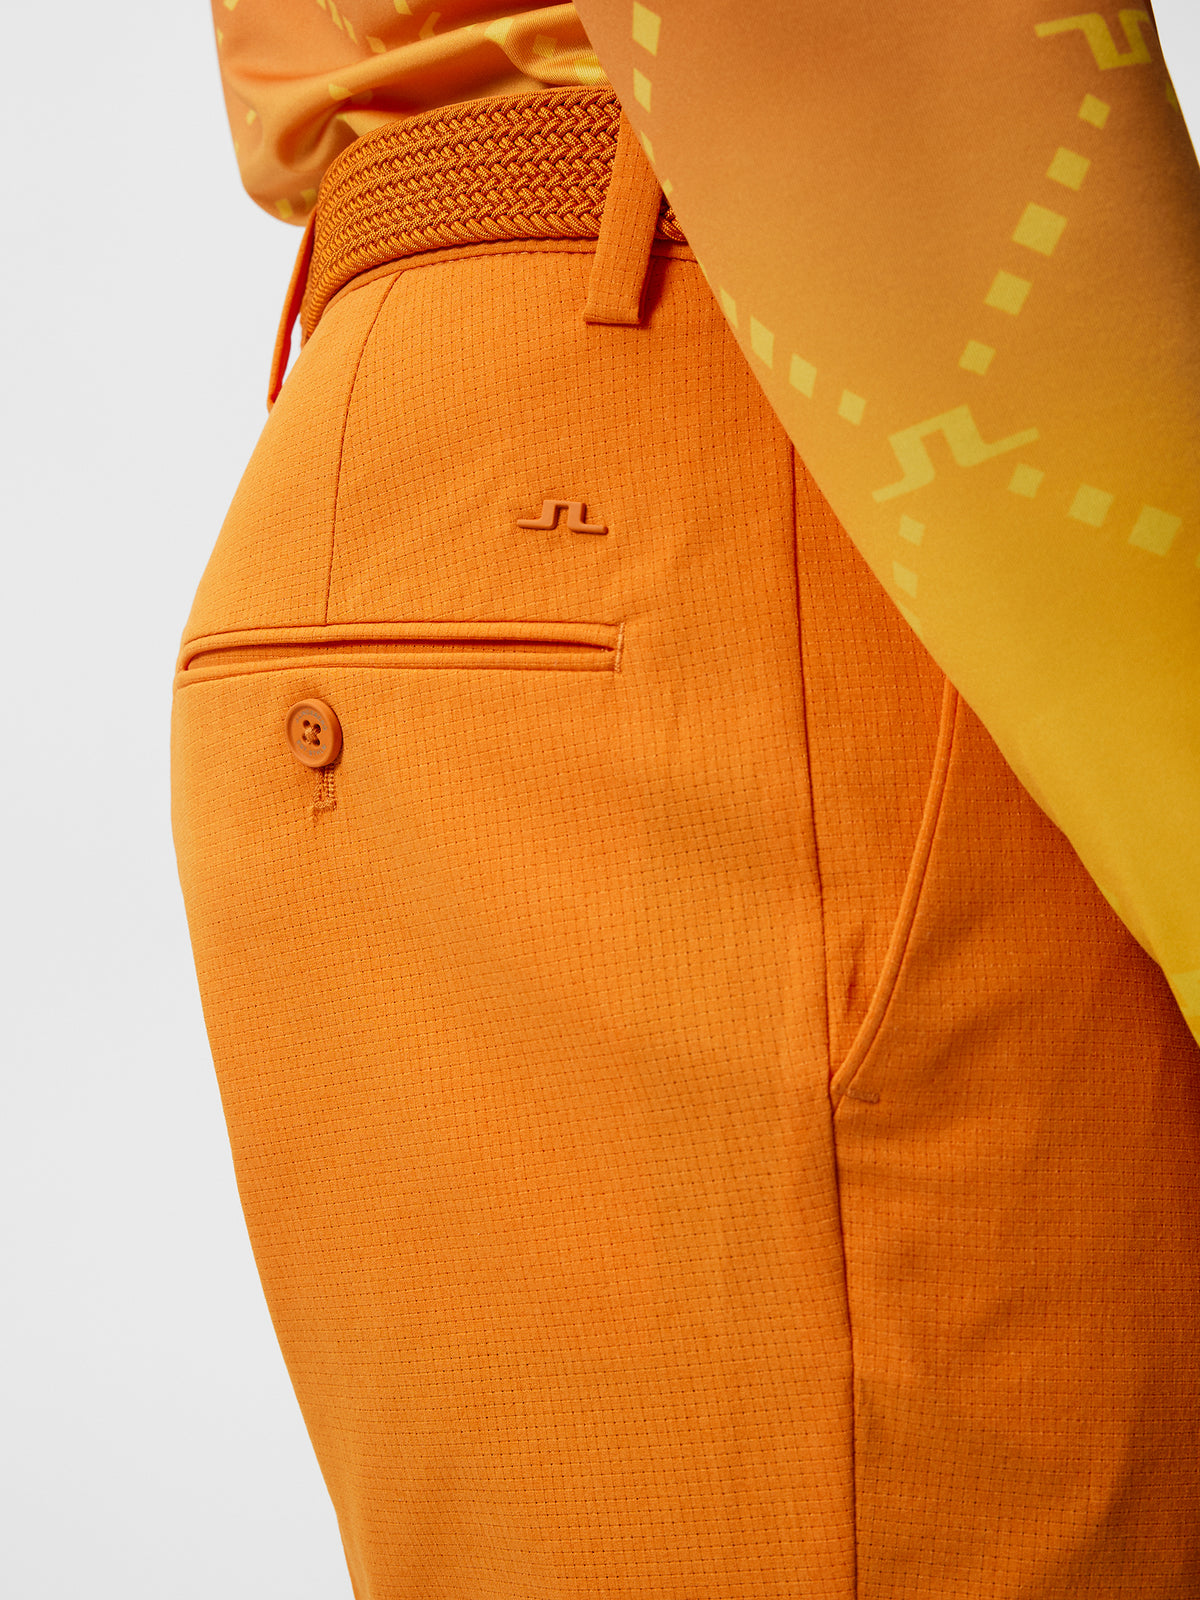 Vent Tight Shorts / Russet Orange